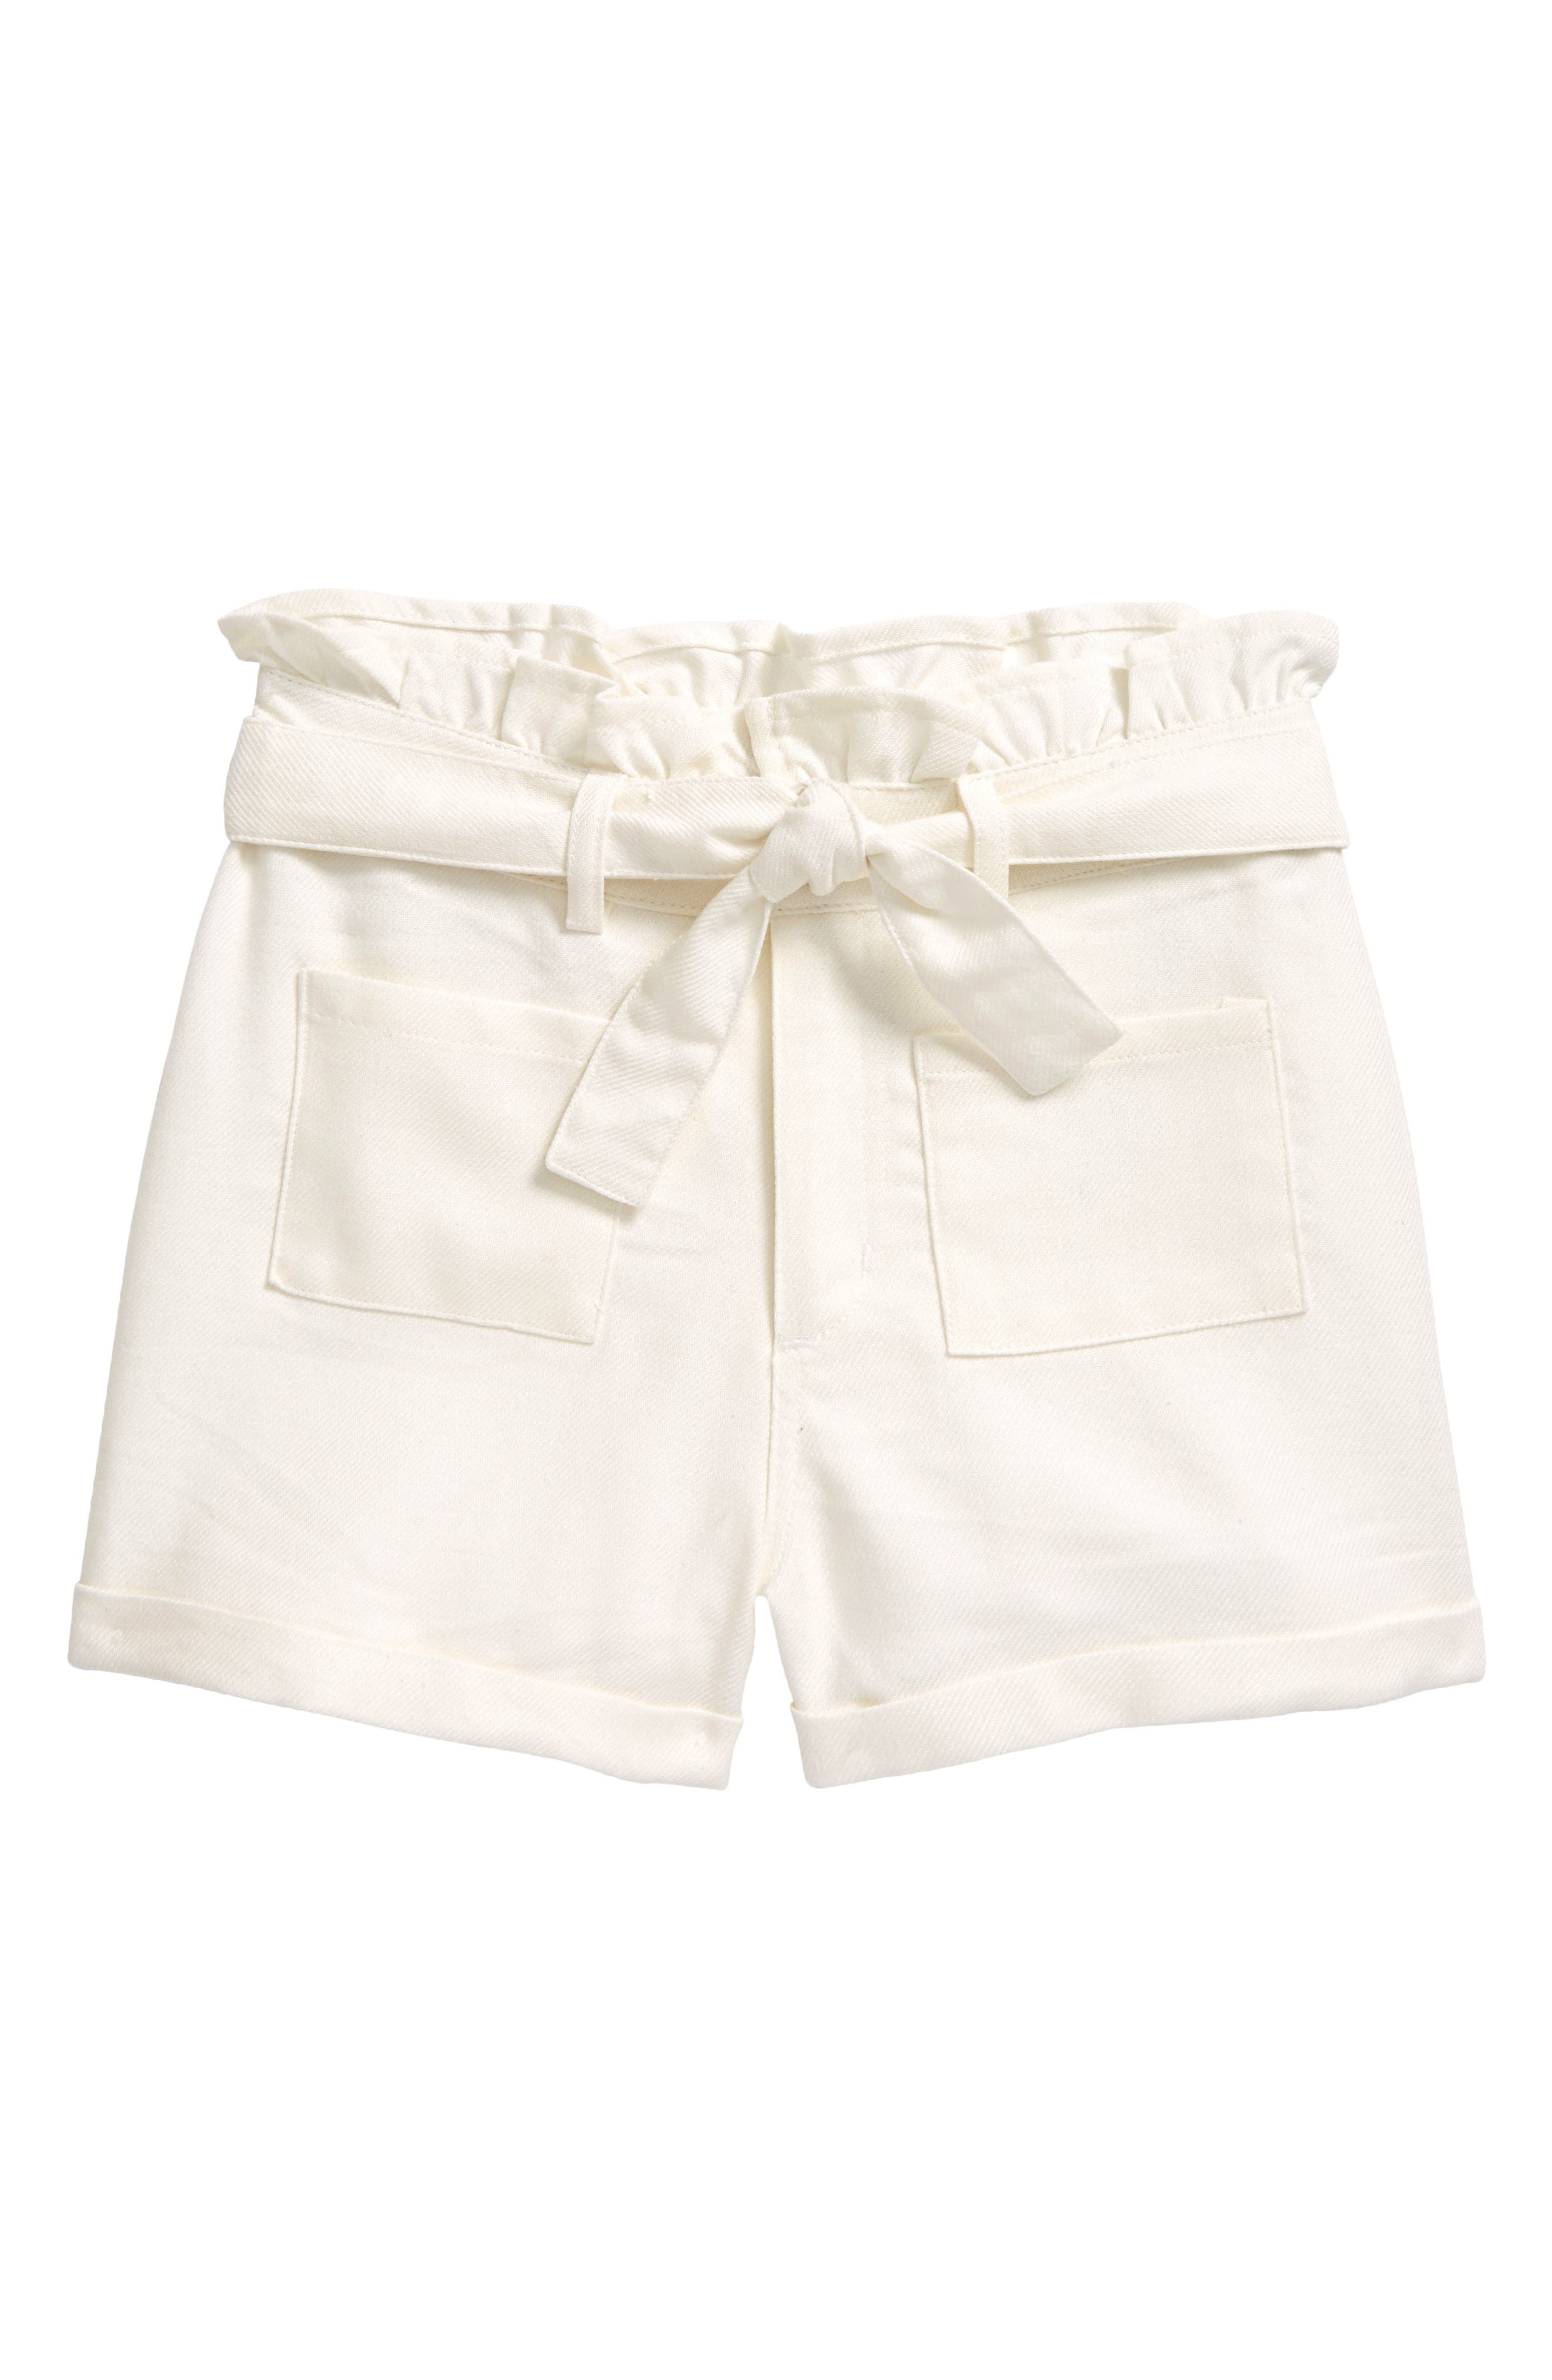 white shorts girls